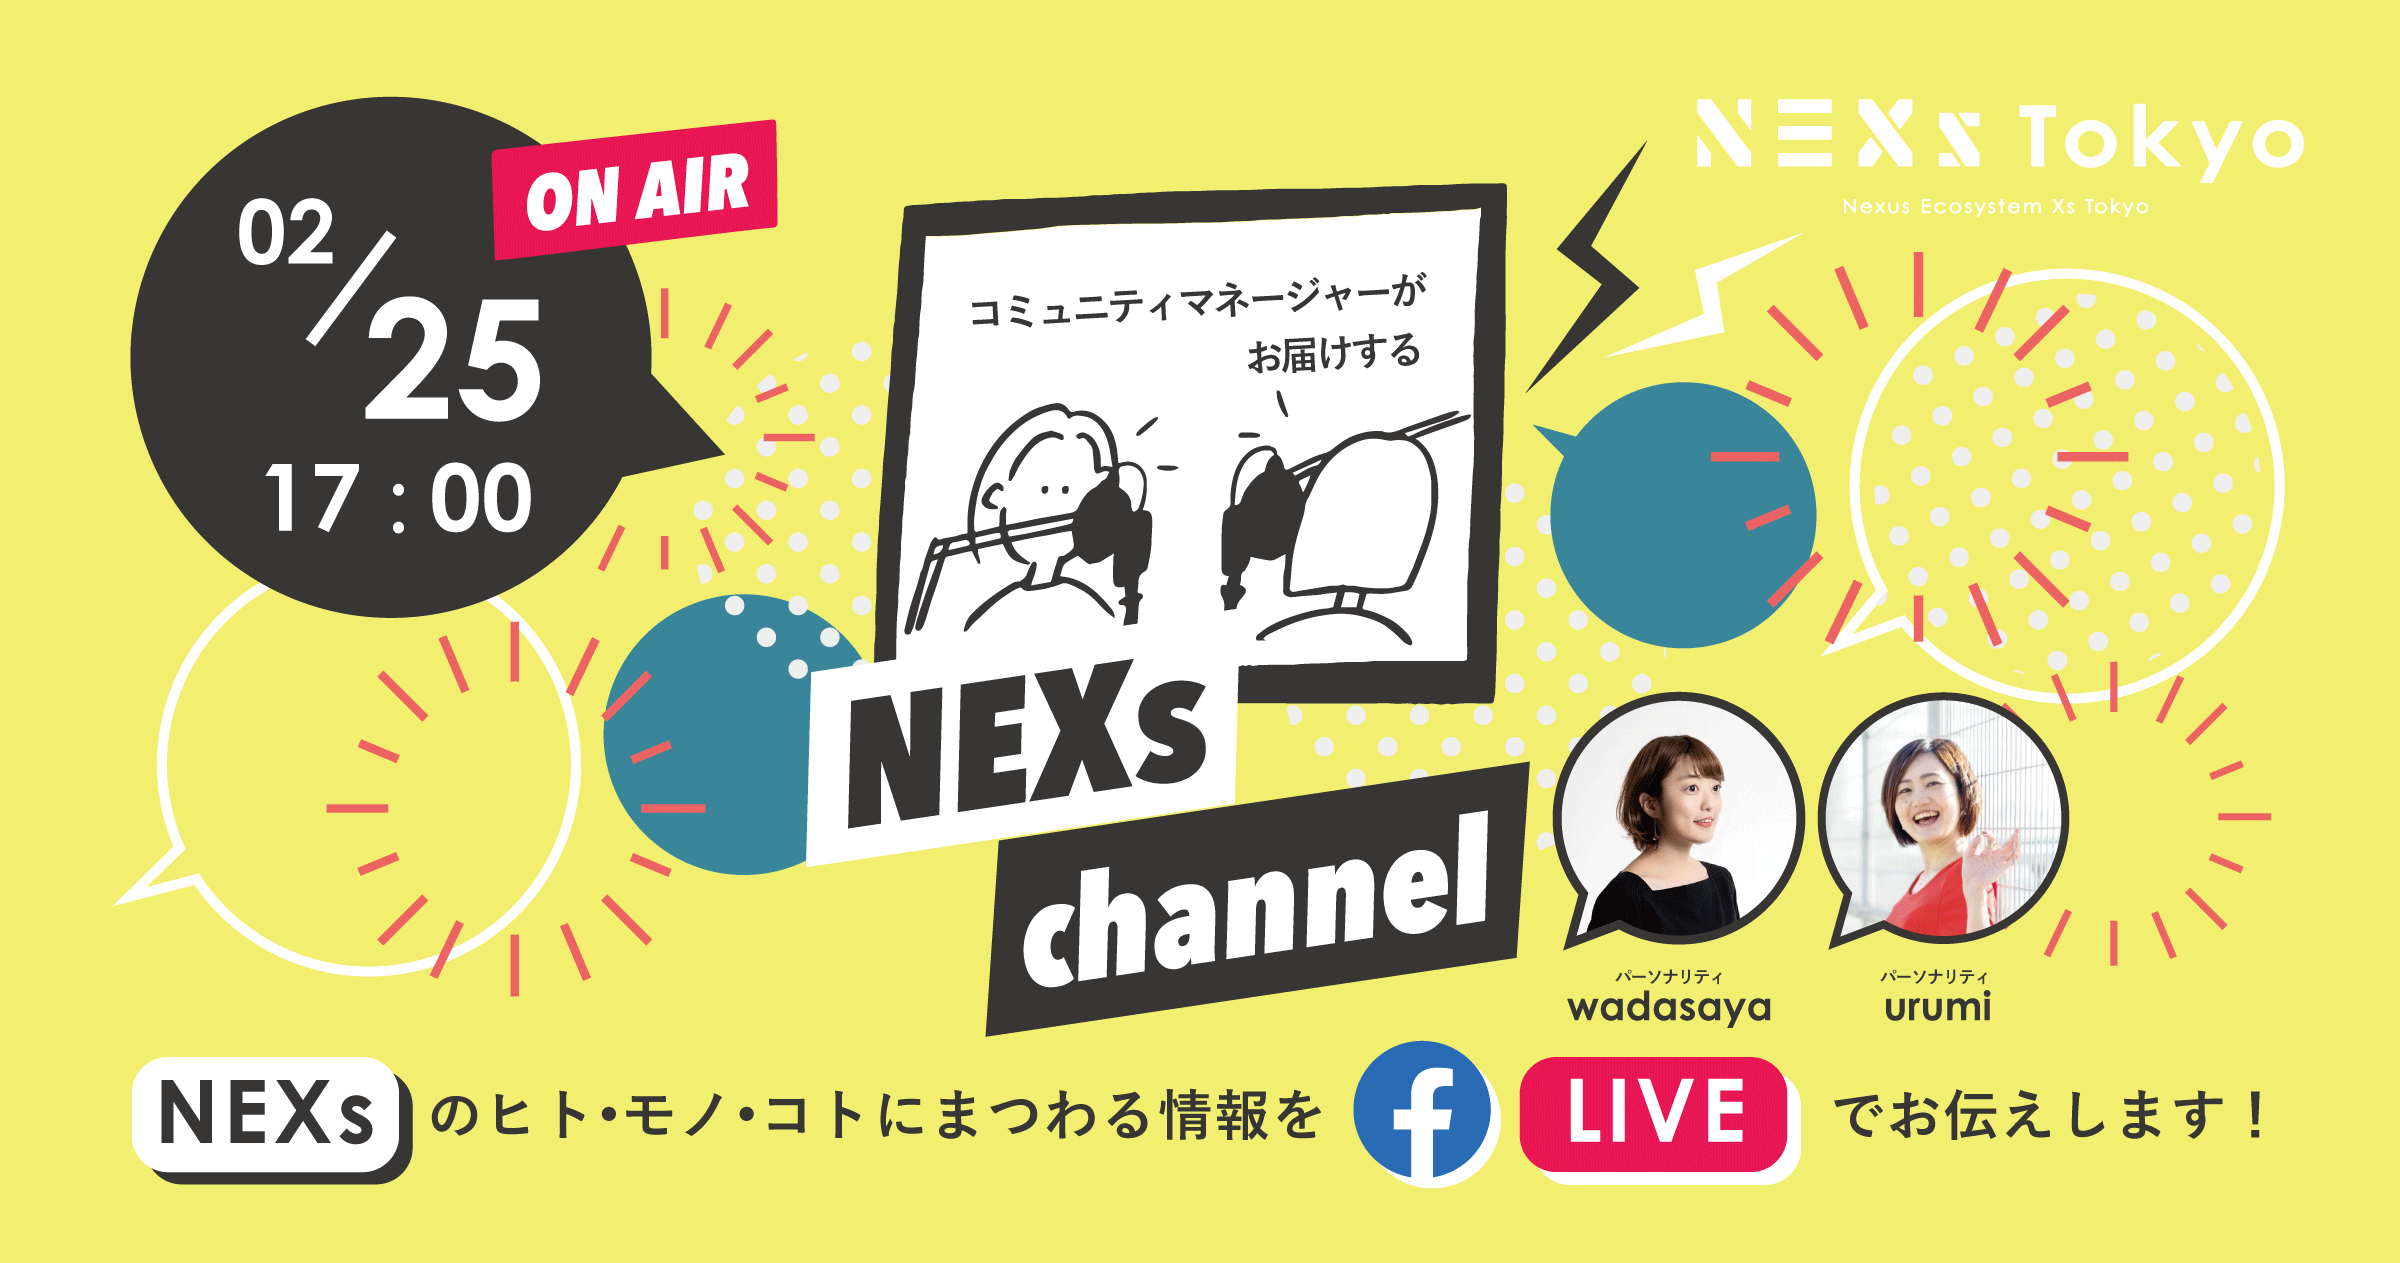 NEXs channel #2-NEXsTokyoのヒト・モノ・コトを特設ラジオブースから生放送でお届け！-